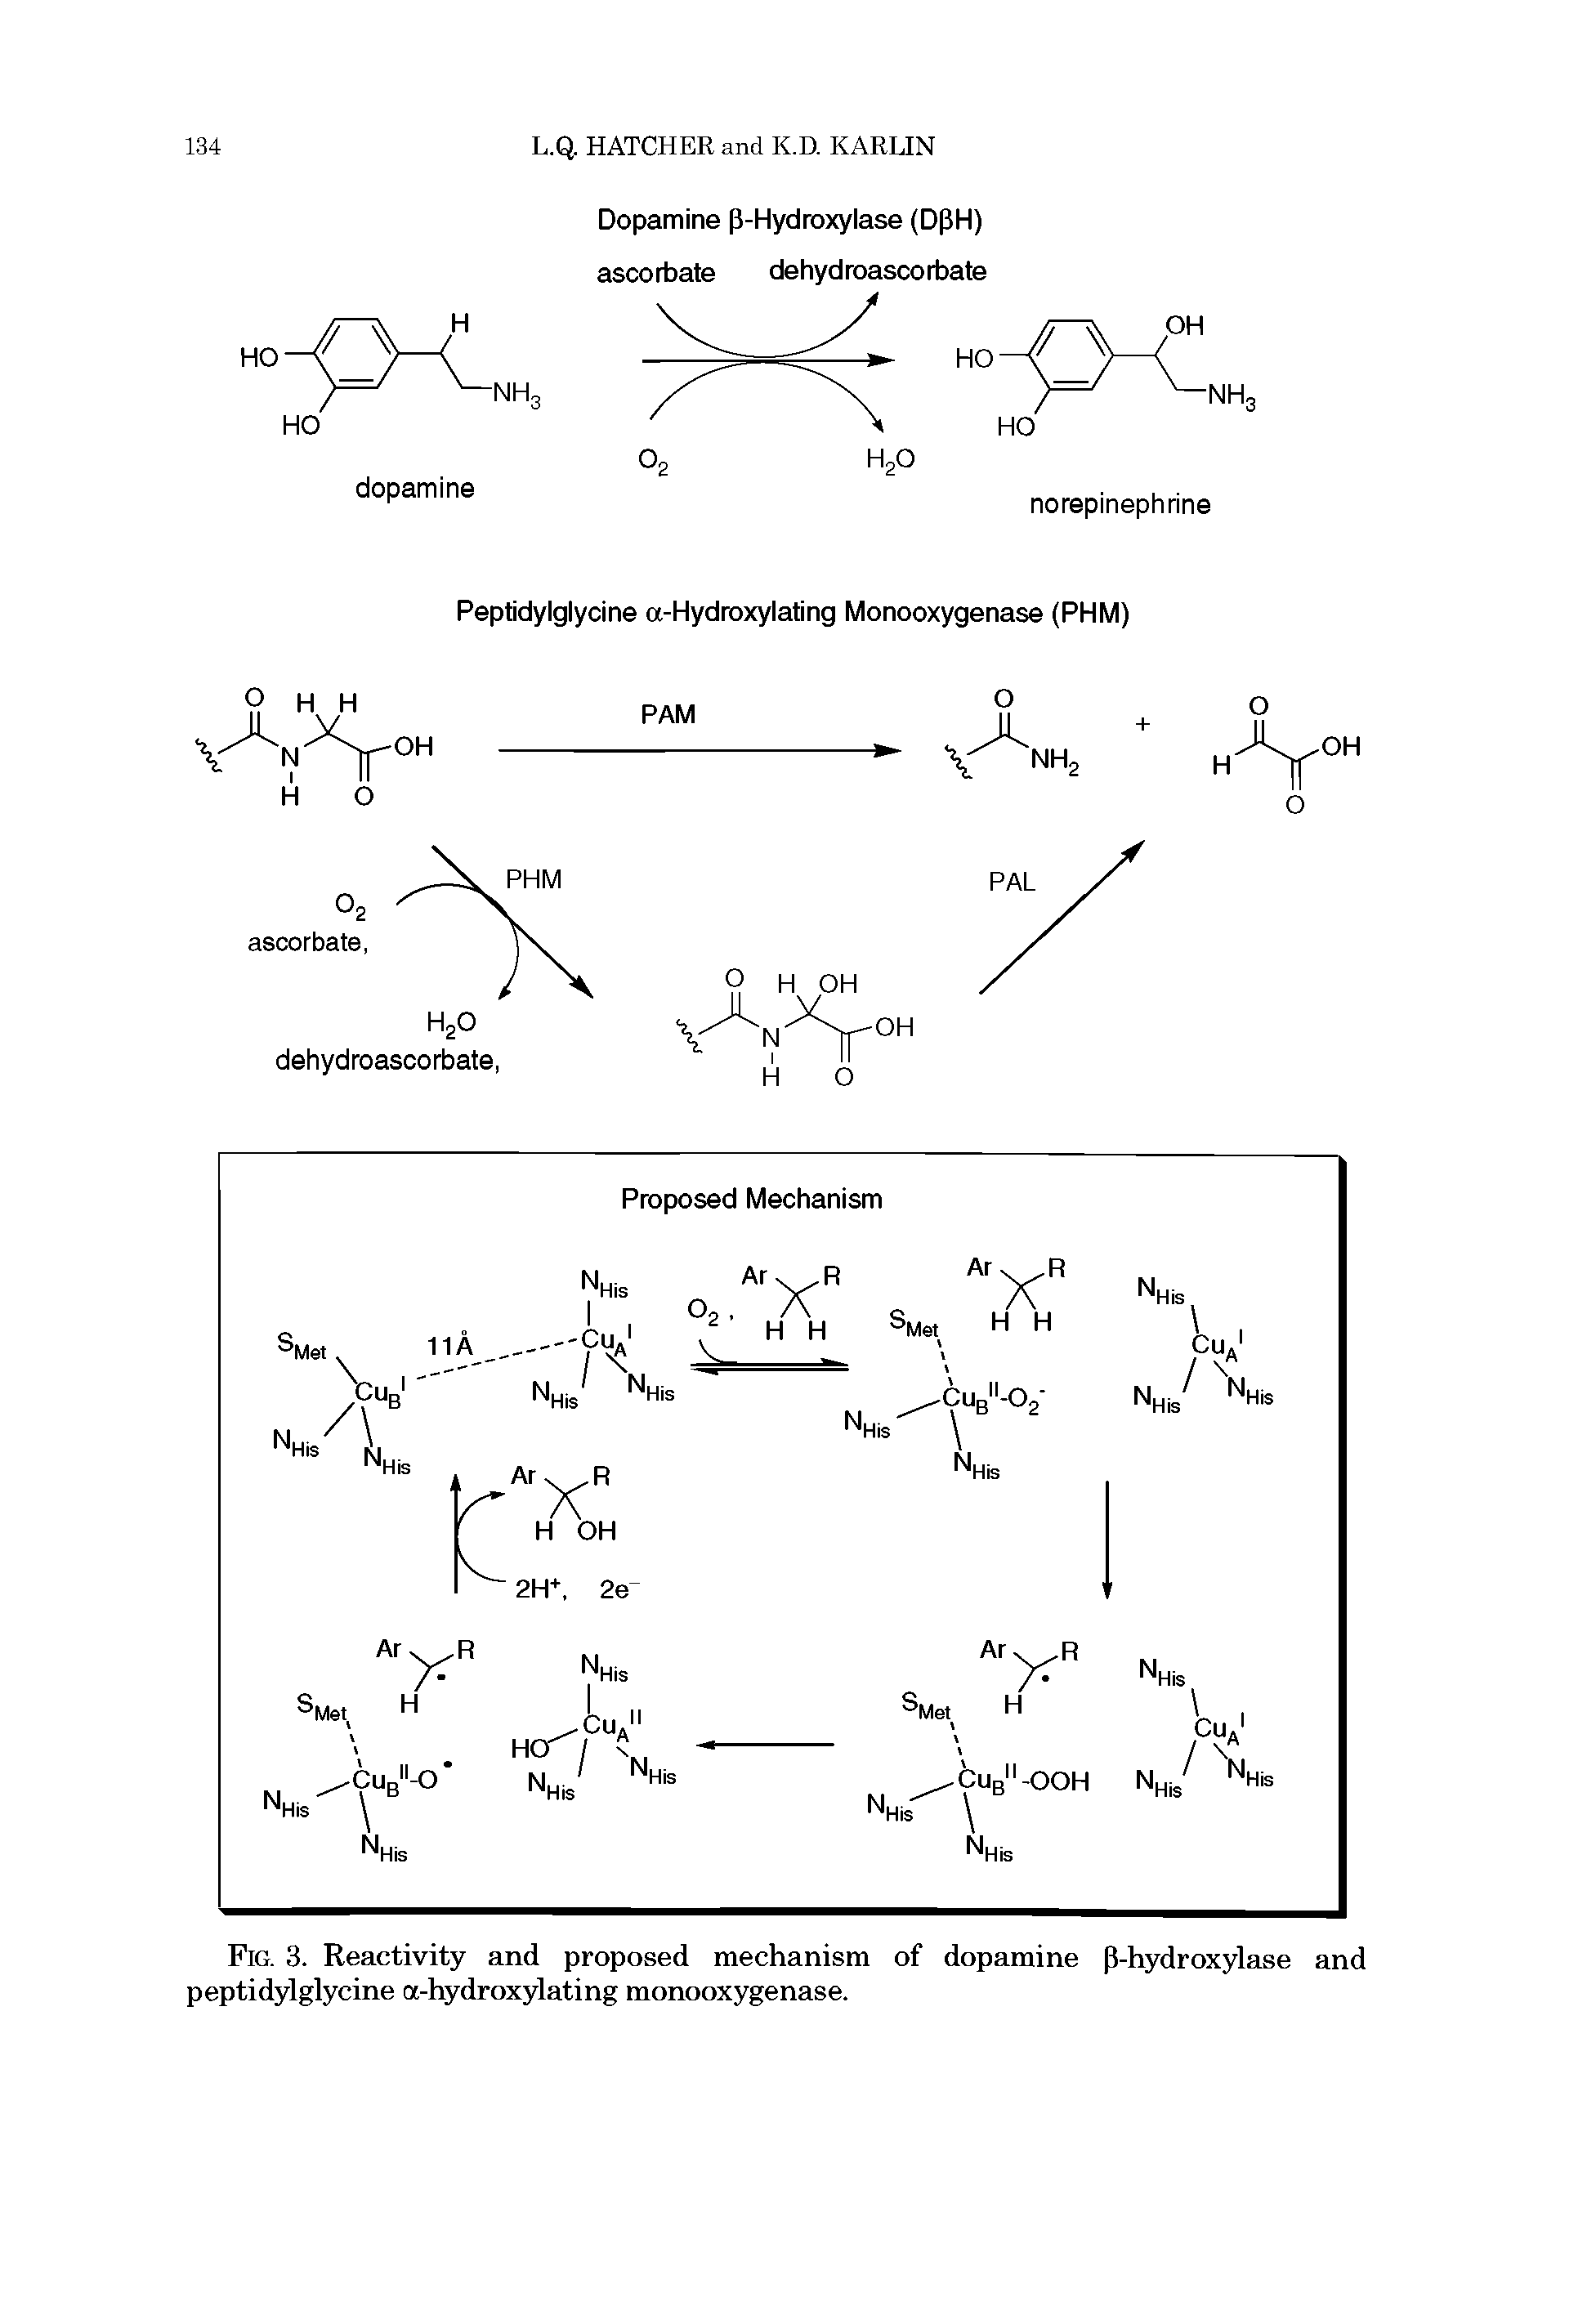 Fig. 3. Reactivity and proposed mechanism of dopamine P-hydroxylase and peptidylglycine a-hydroxylating monooxygenase.